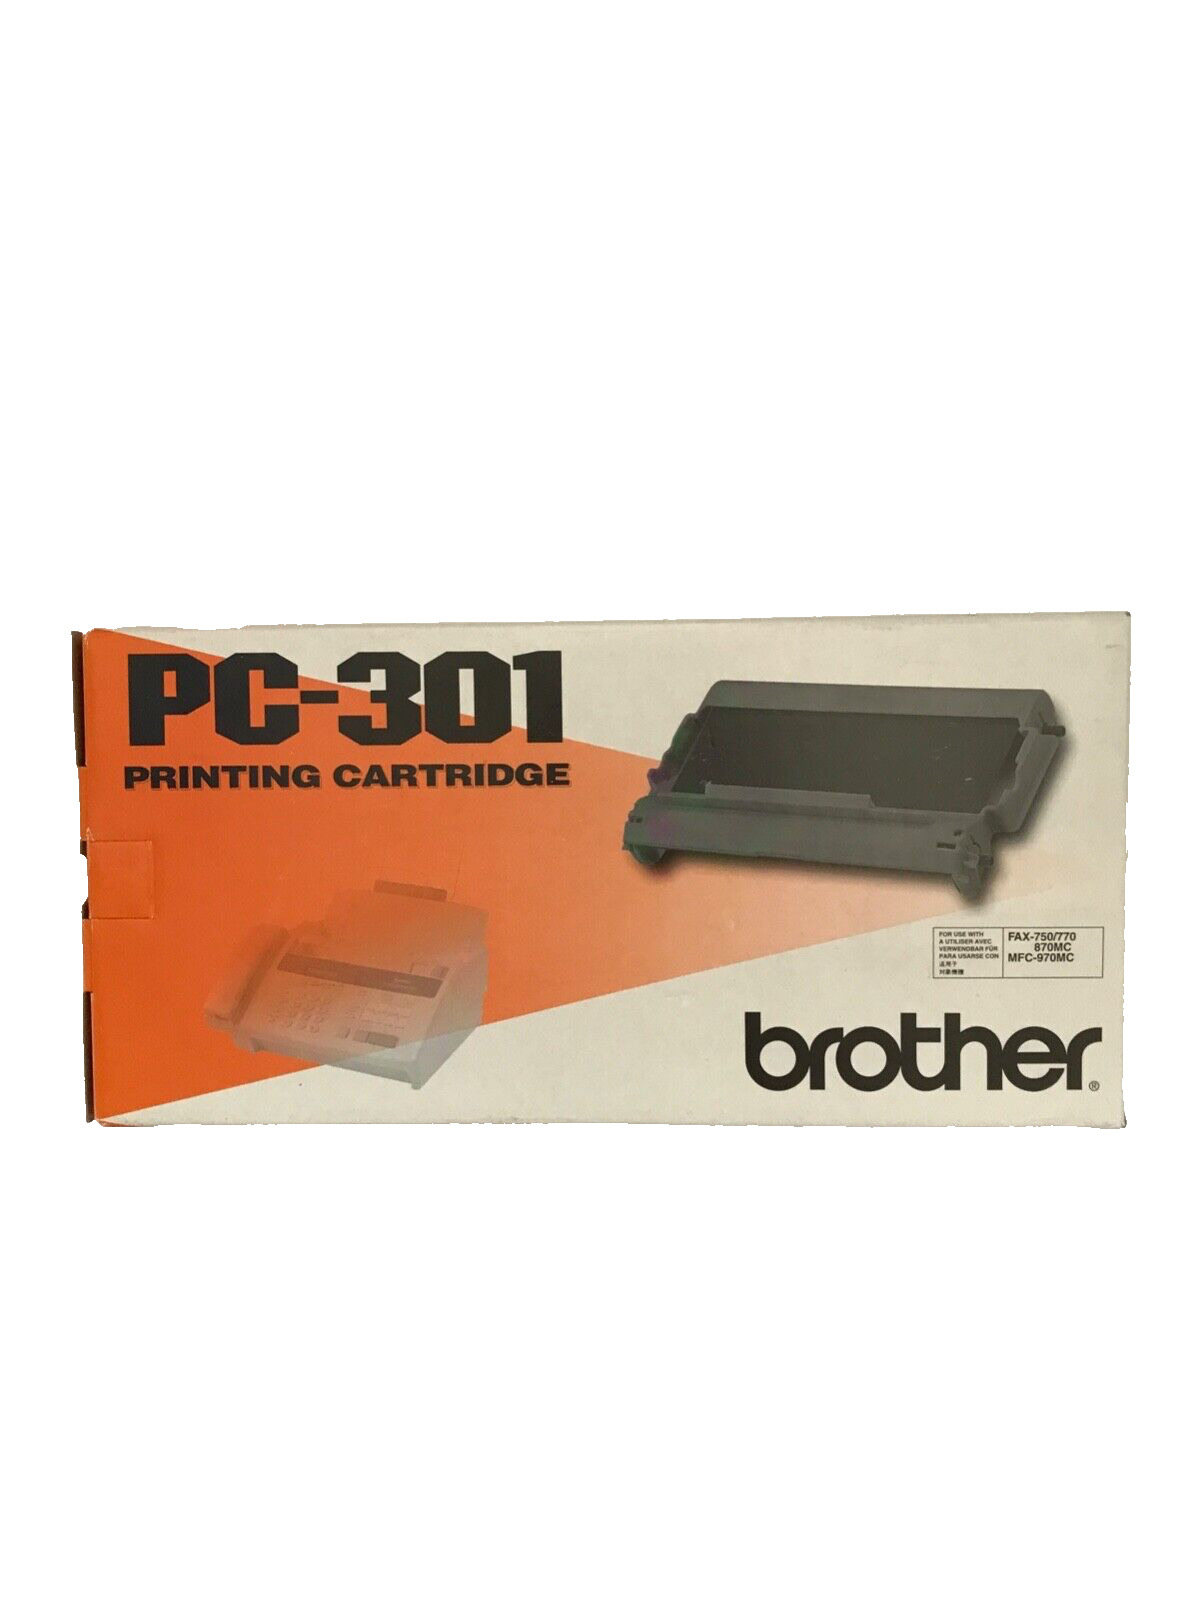 Brother Model PC-301 Printing Cartridge For Fax 750/770/775/775si/870mc/885mc